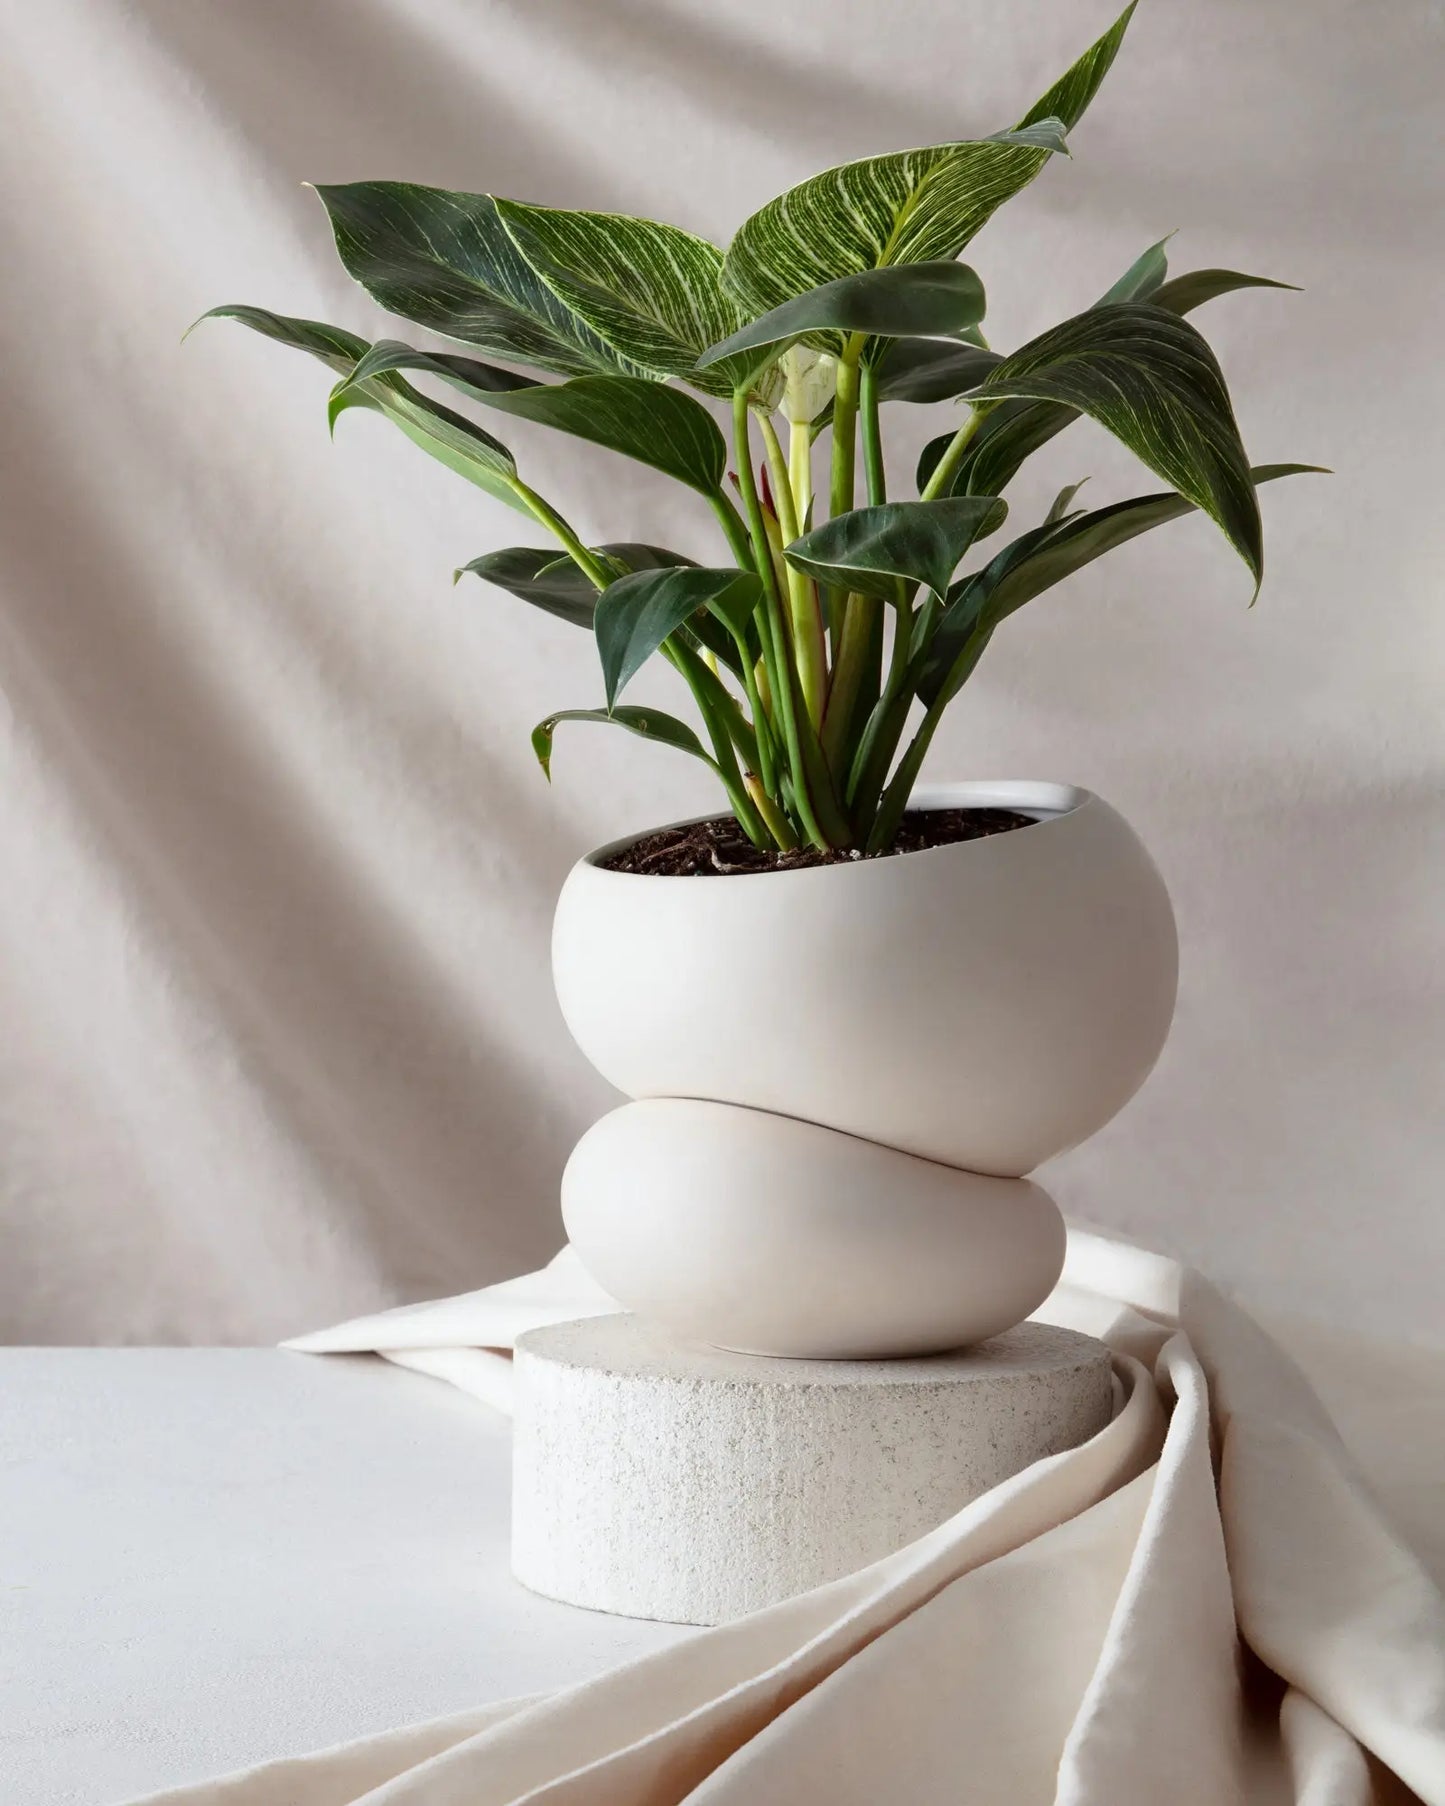 GREENERY UNLIMITED Fondra Self Watering Pot - White, 6.5" Diameter